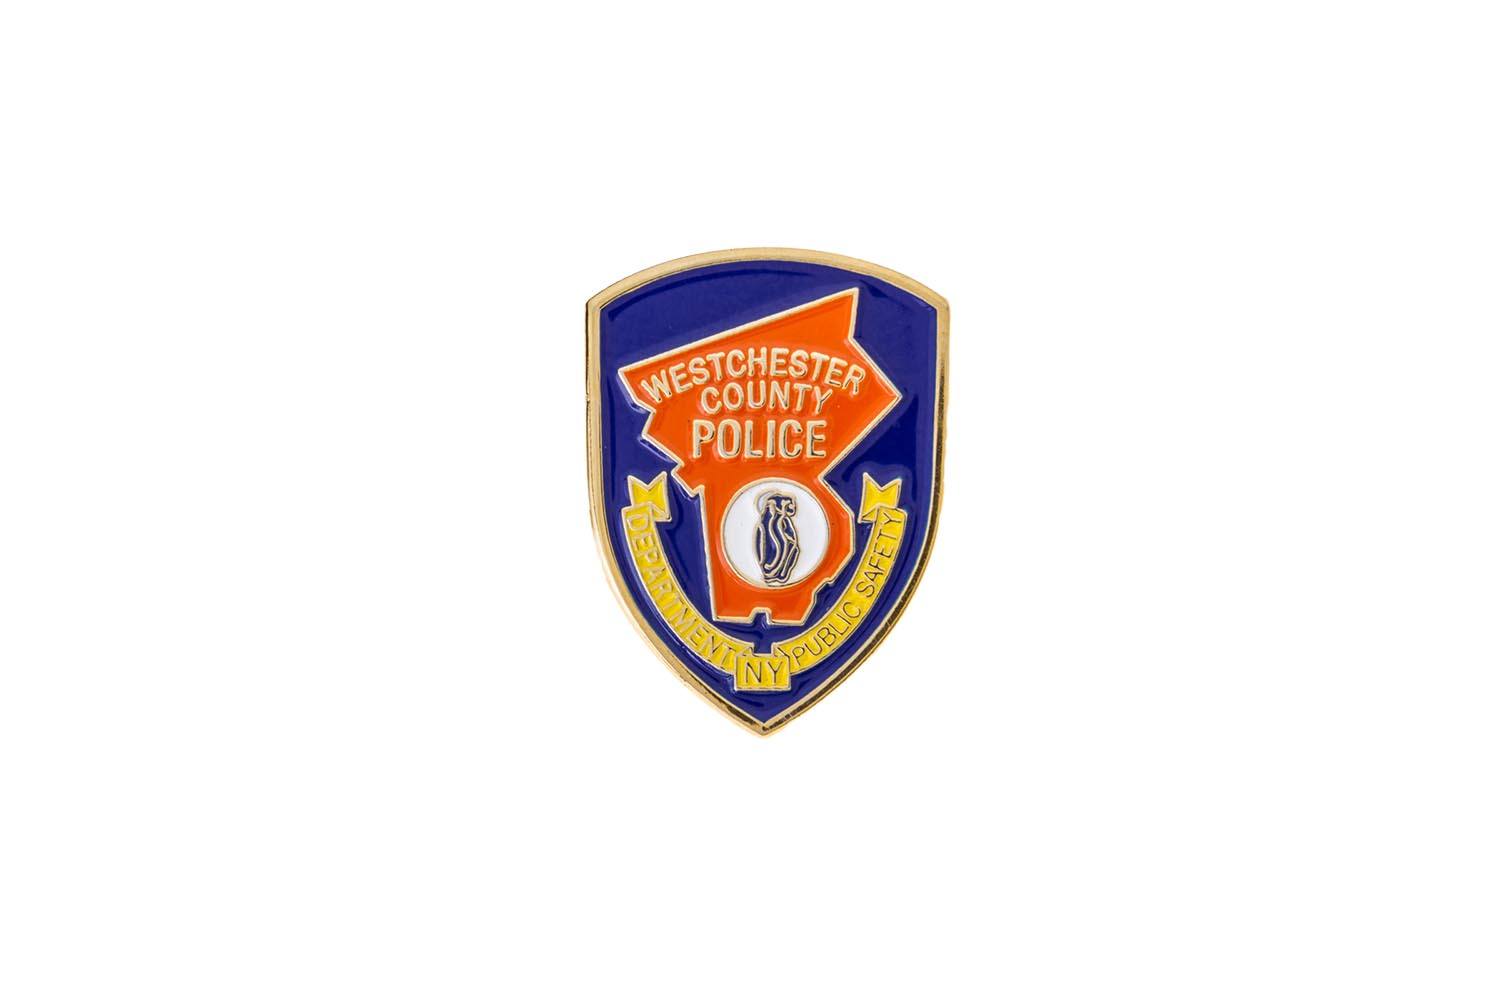 Police lapel pin